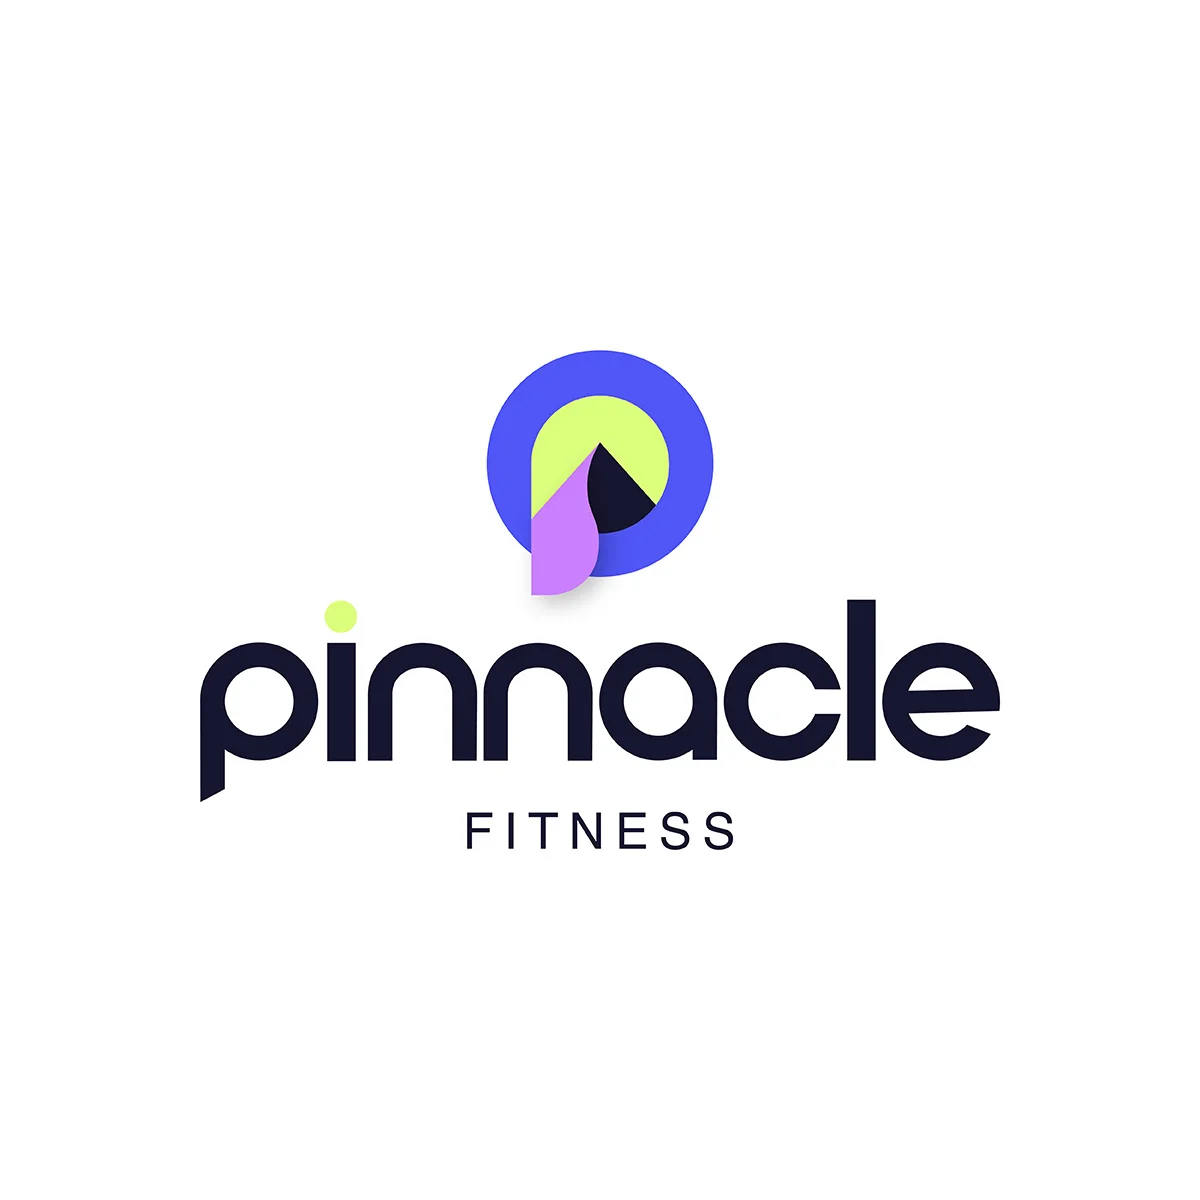 lindsay-mcghee-designs-pinnacle-fitness-squamish-carrie-charlton-logo-1200x1200